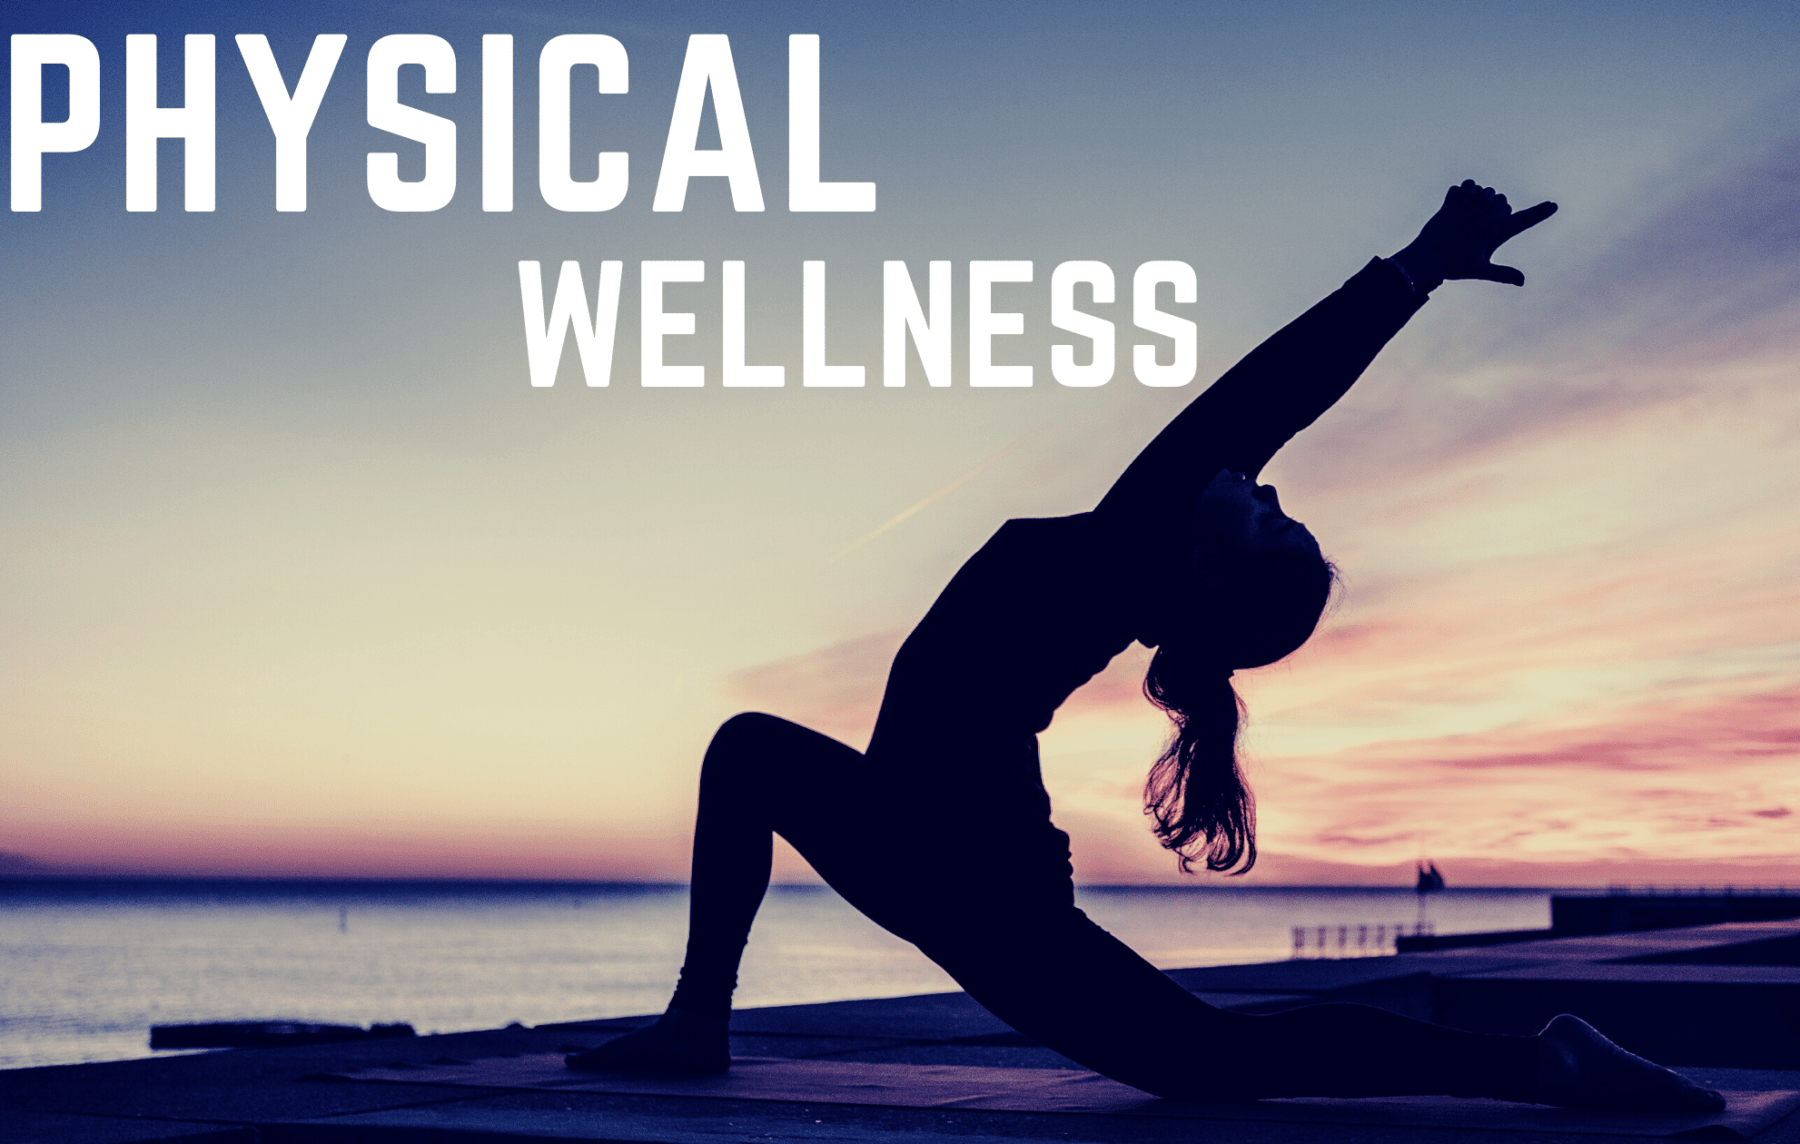 Physical wellness